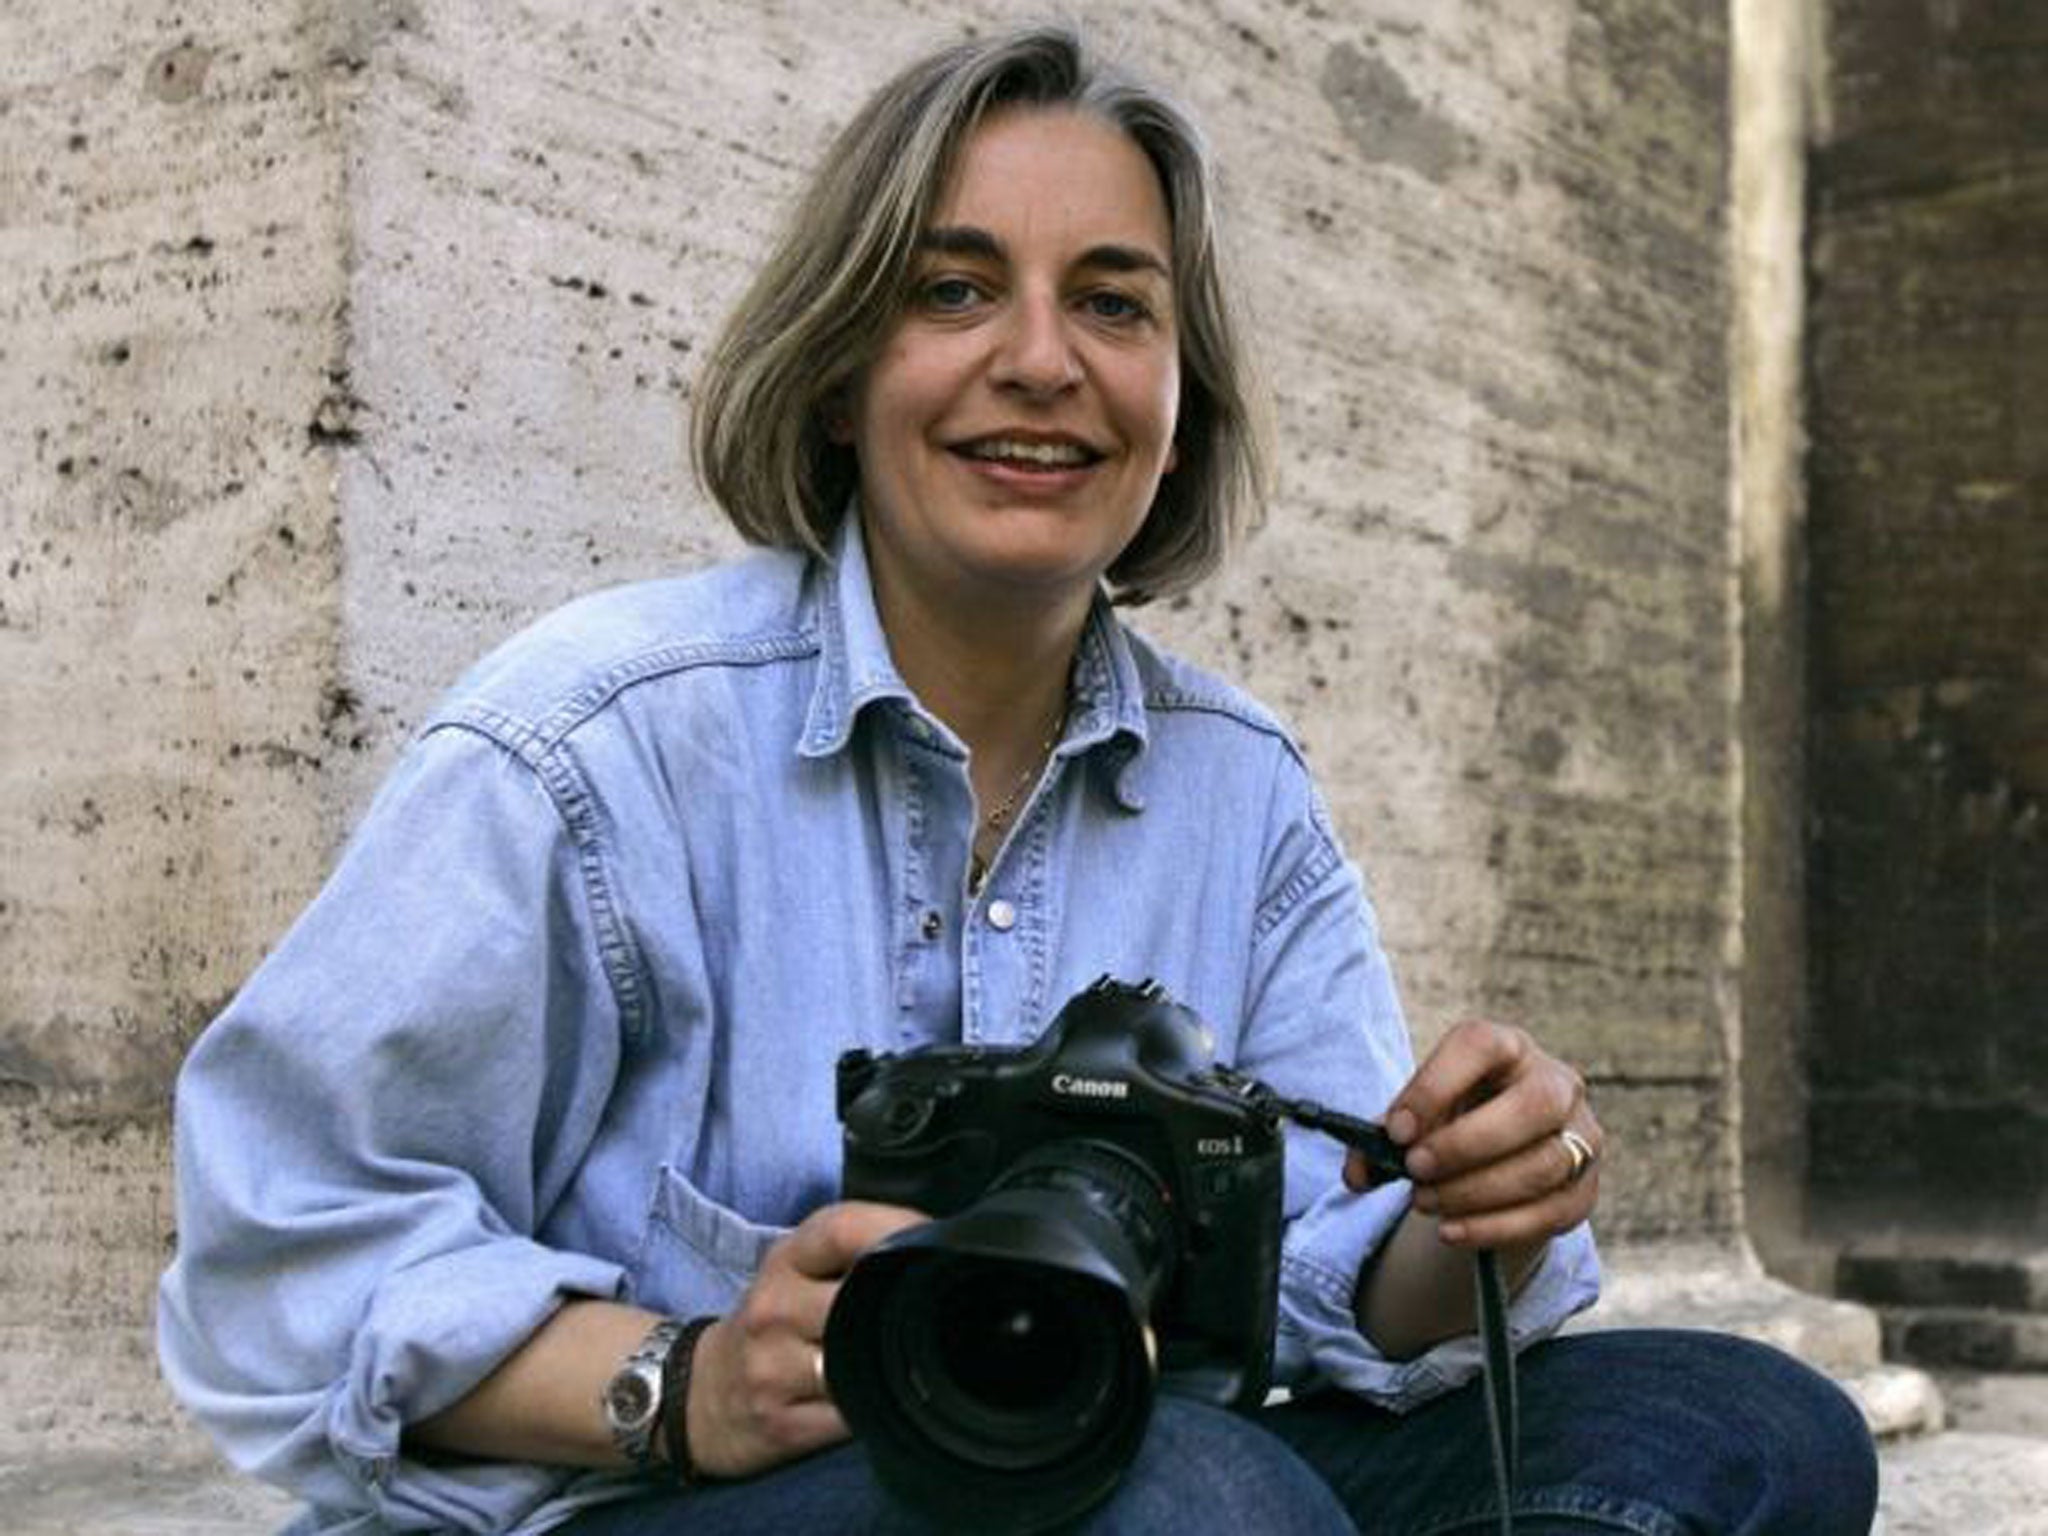 German photographer Anja Niedringhaus, 48, was killed instantly